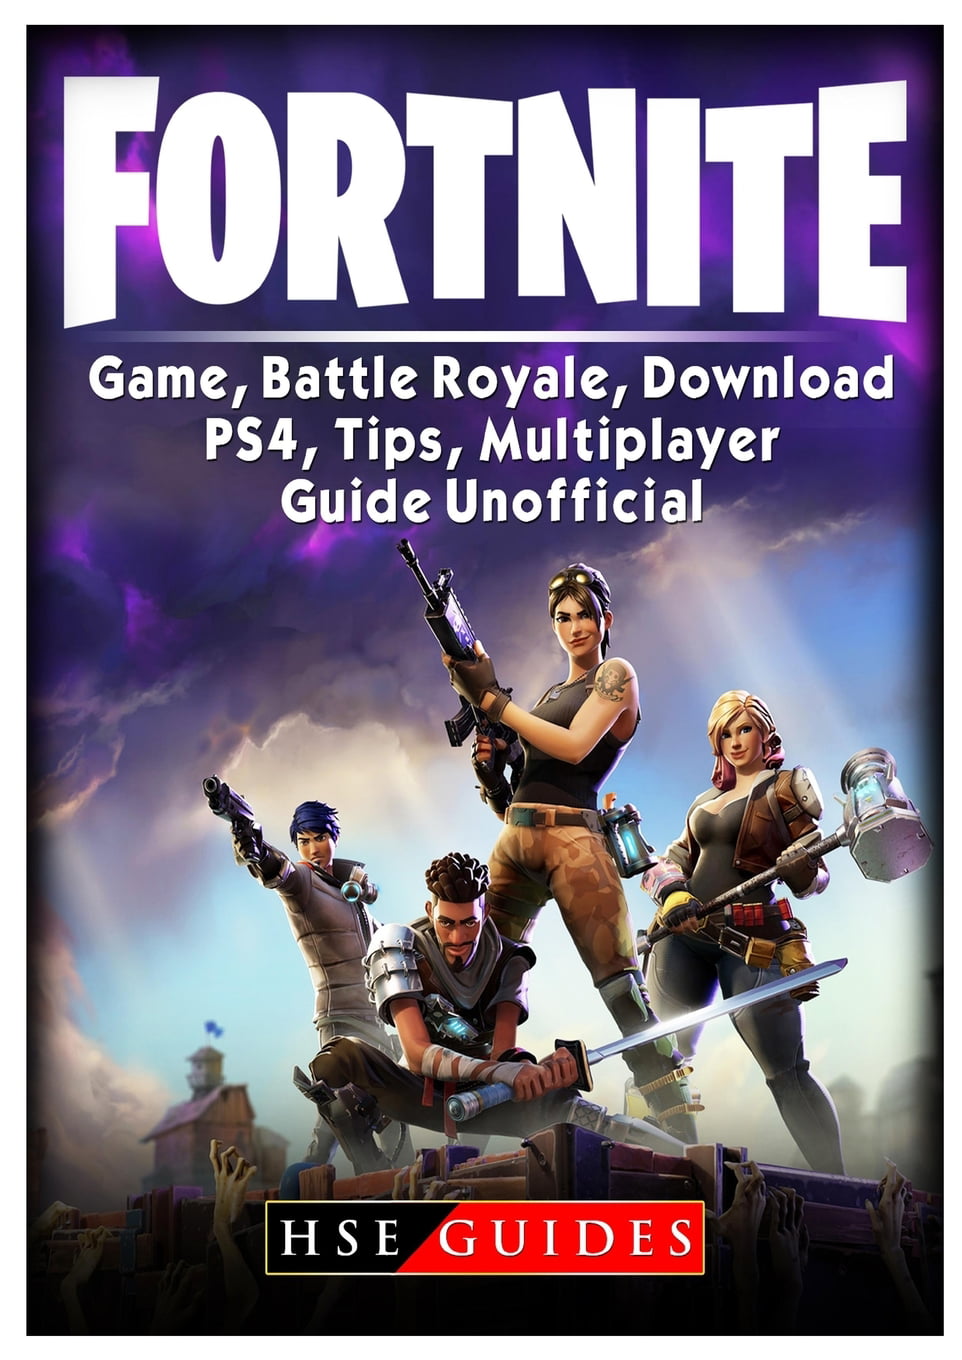 Fortnite Game, Battle Royale, Download, Ps4, Tips, Multiplayer